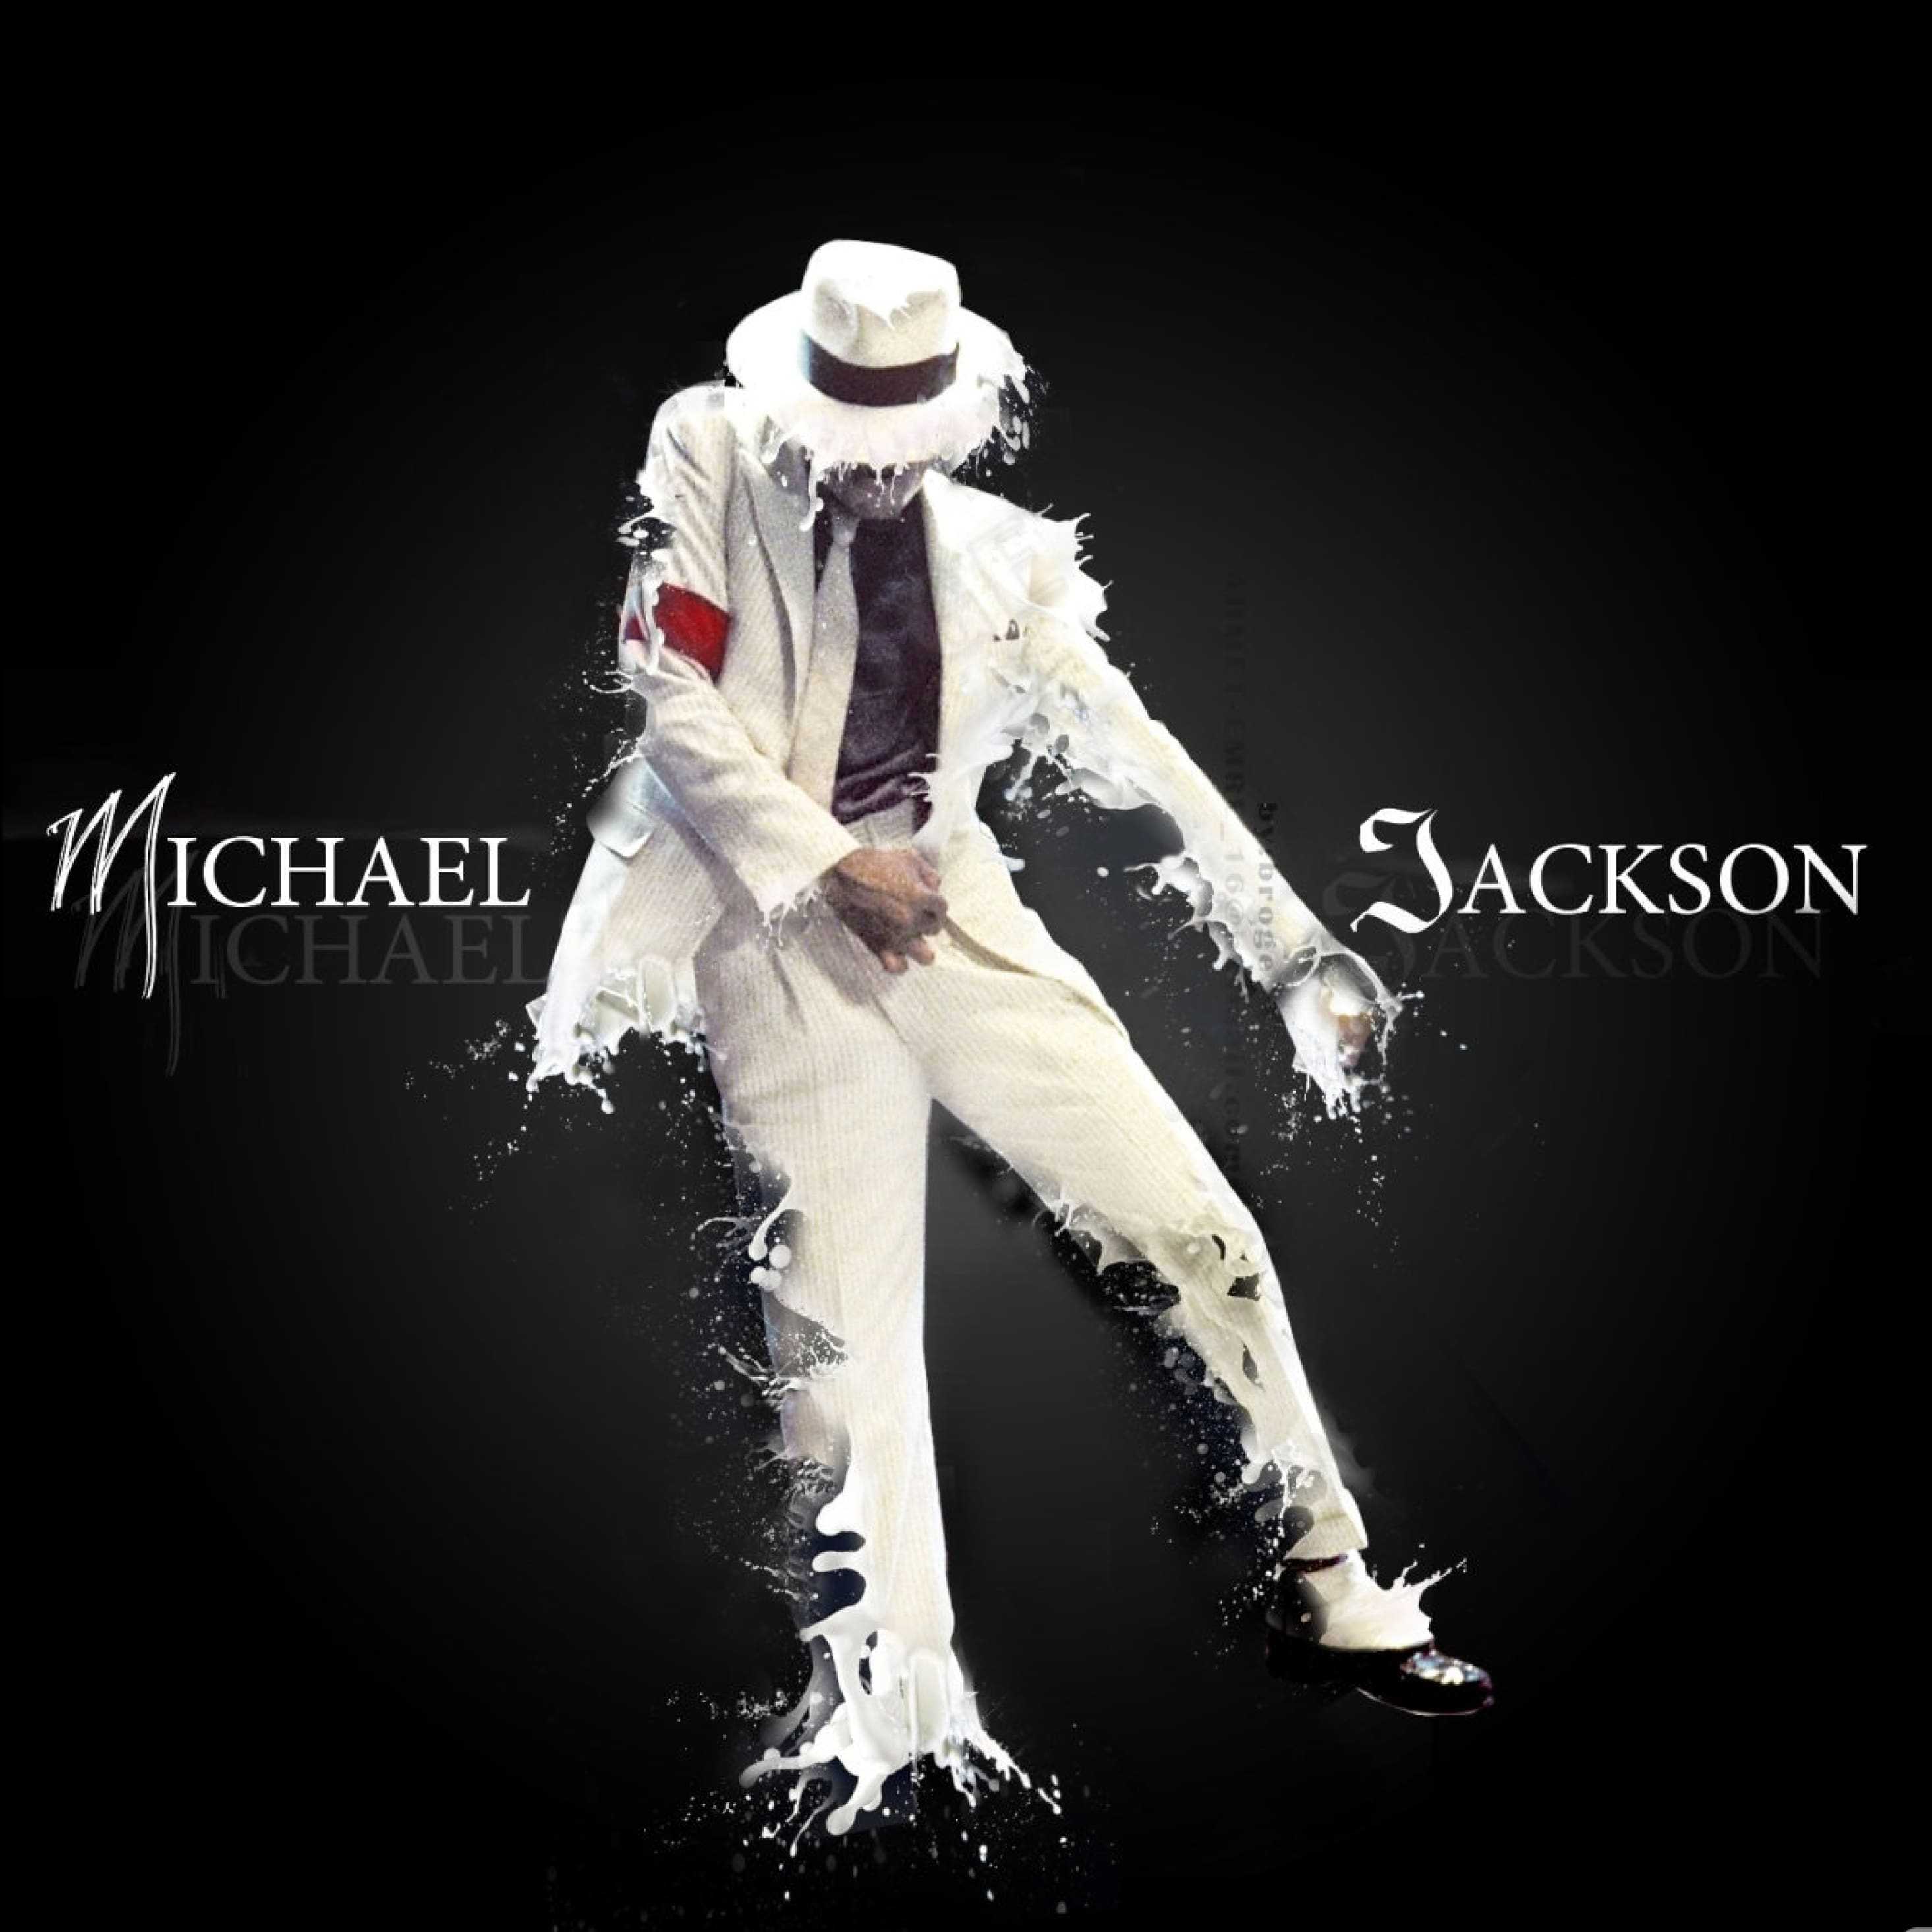 Michael jackson wallpaper hd - Michael Jackson